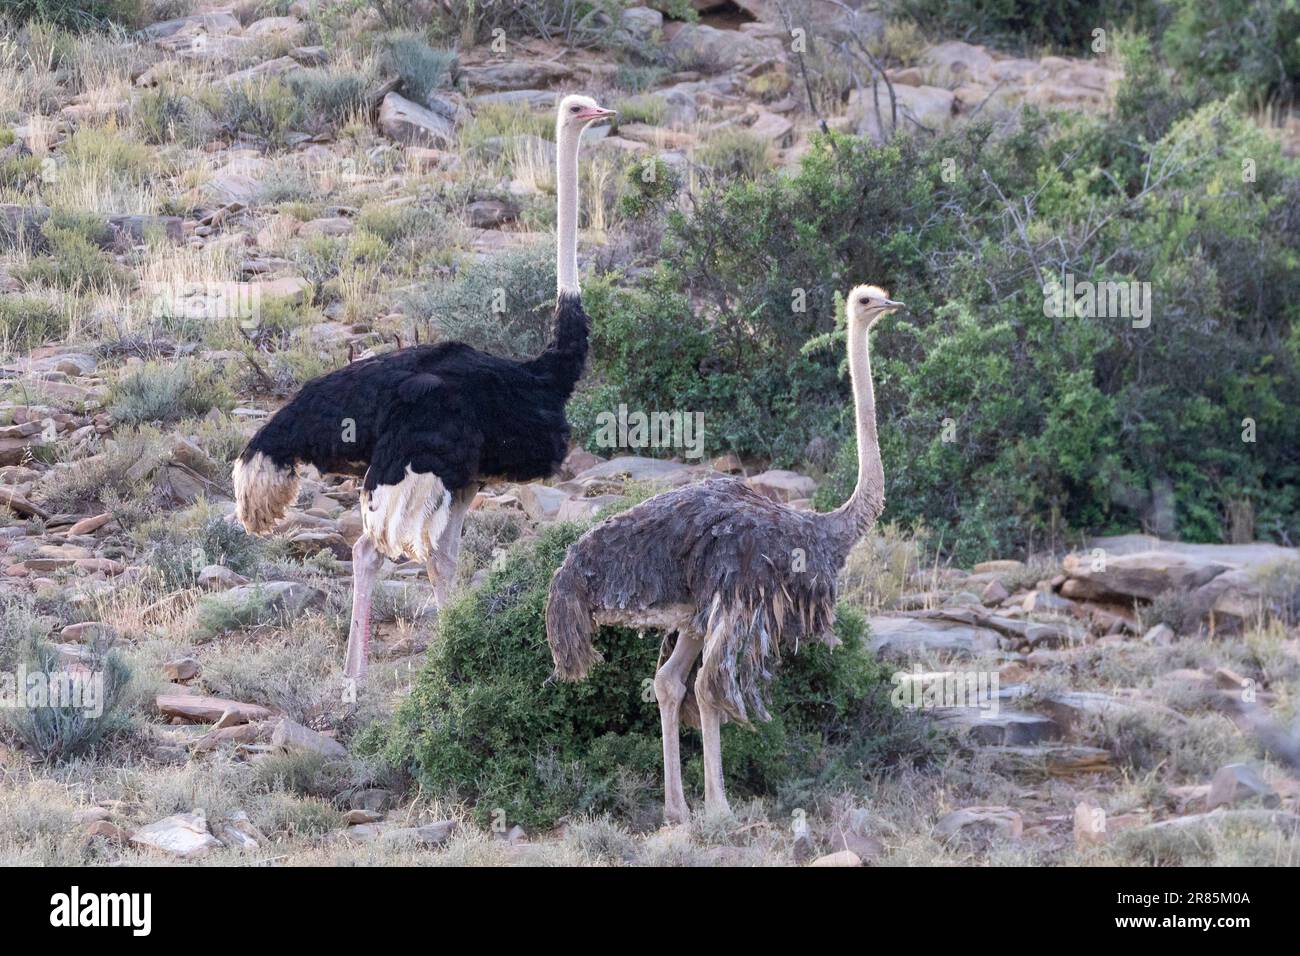 Pair of Common Ostriches (Struthio camelus) at dawn in mountainous  Karoo habitat, South Africa Stock Photo